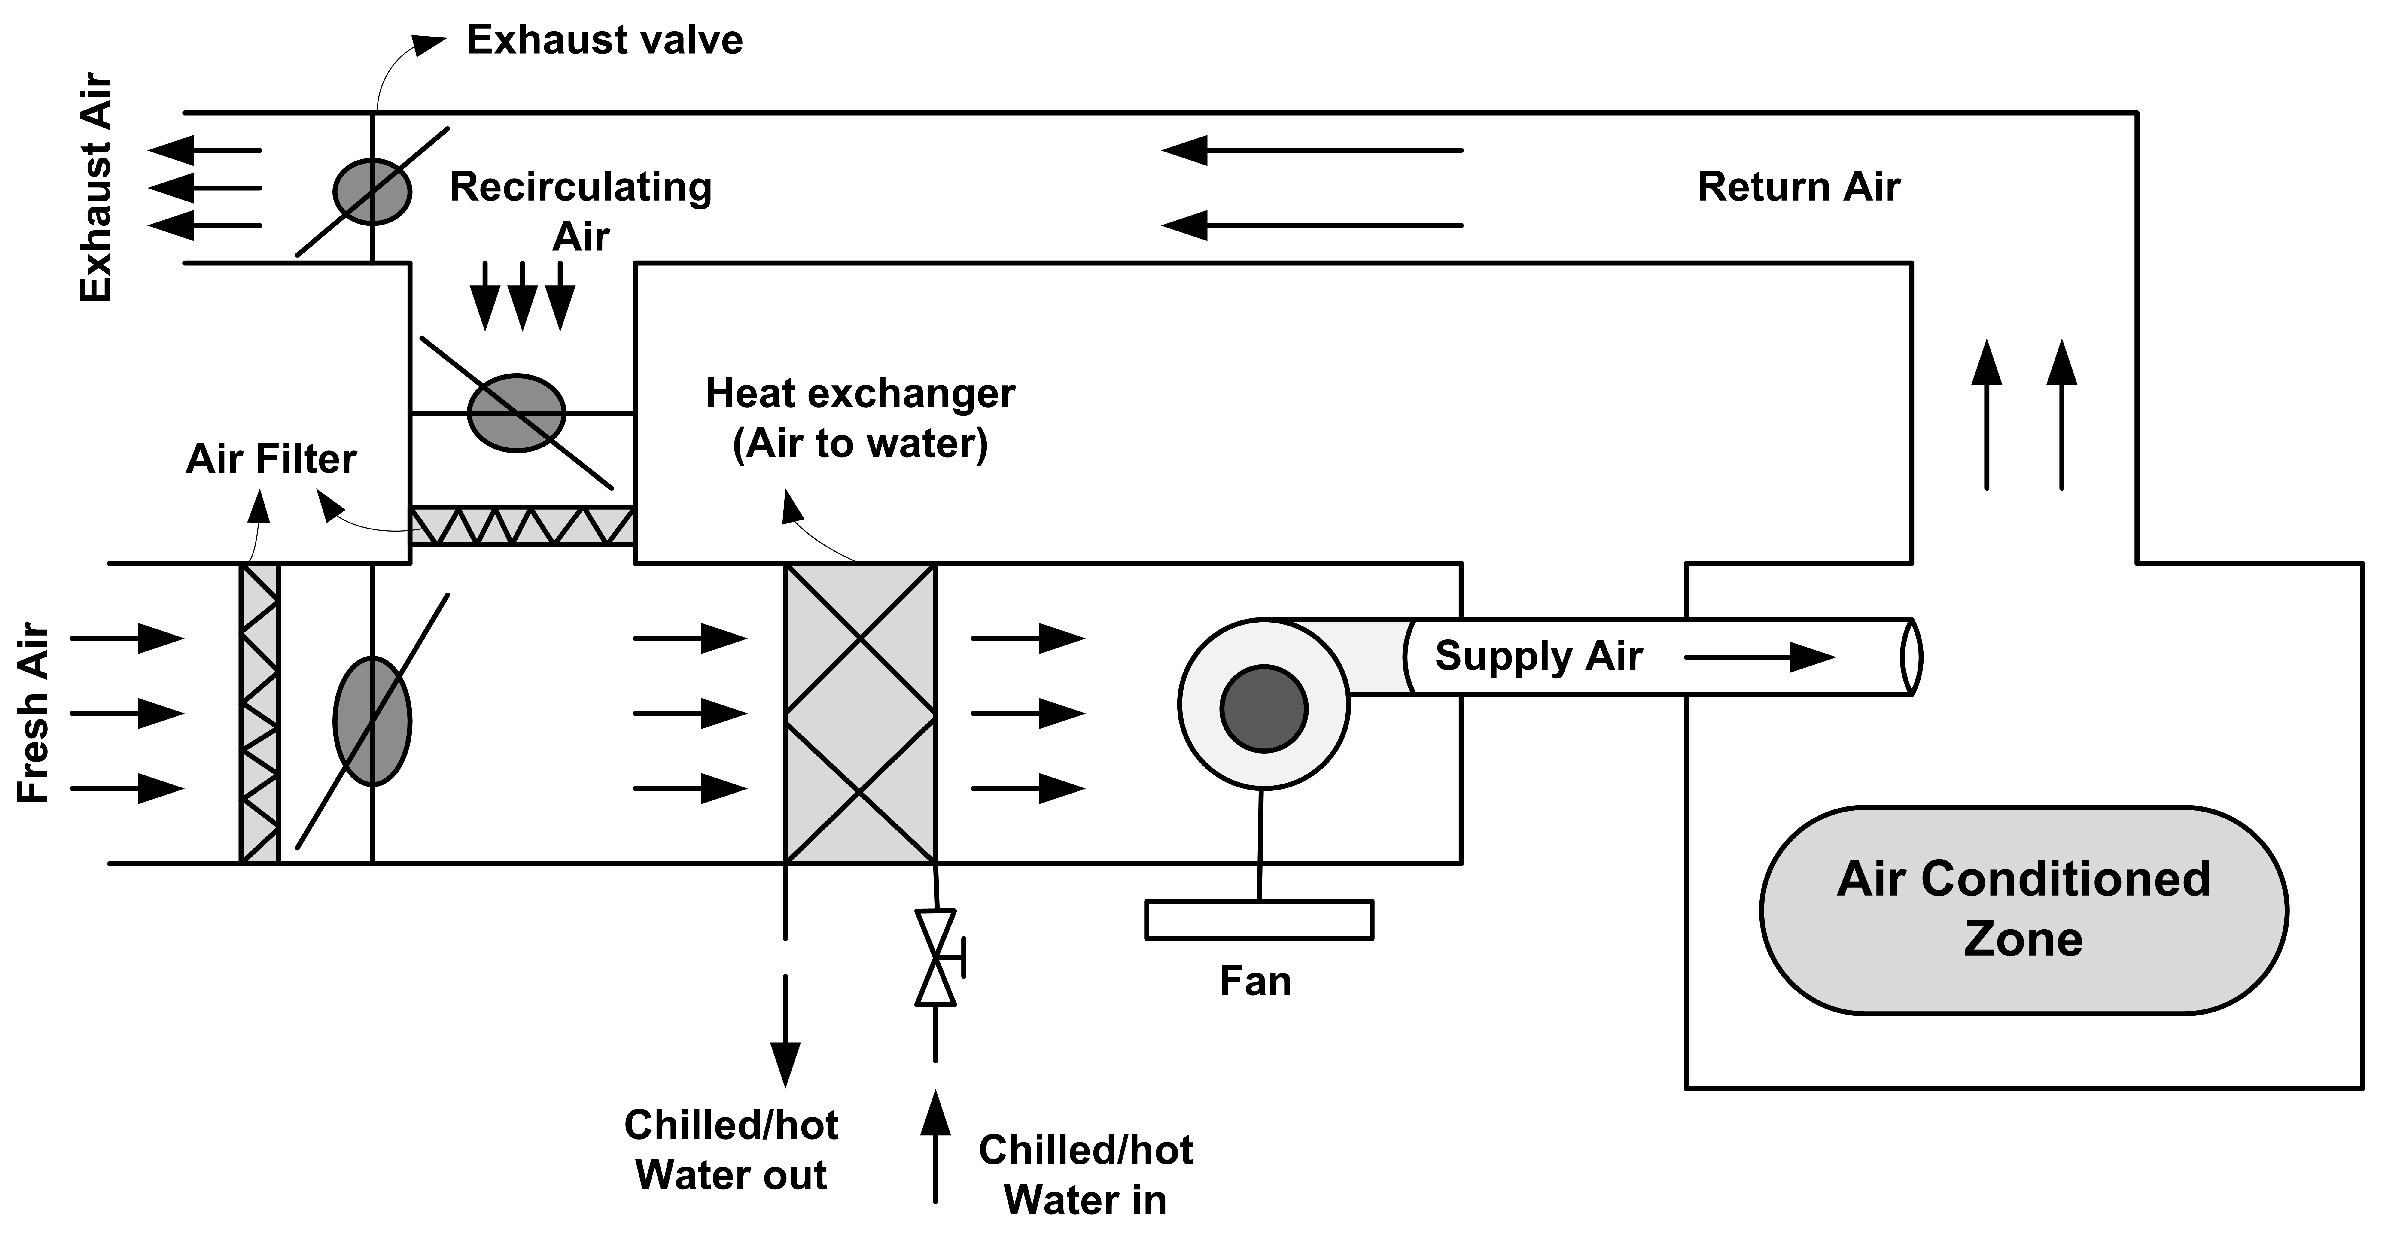 Air conditioner schematic